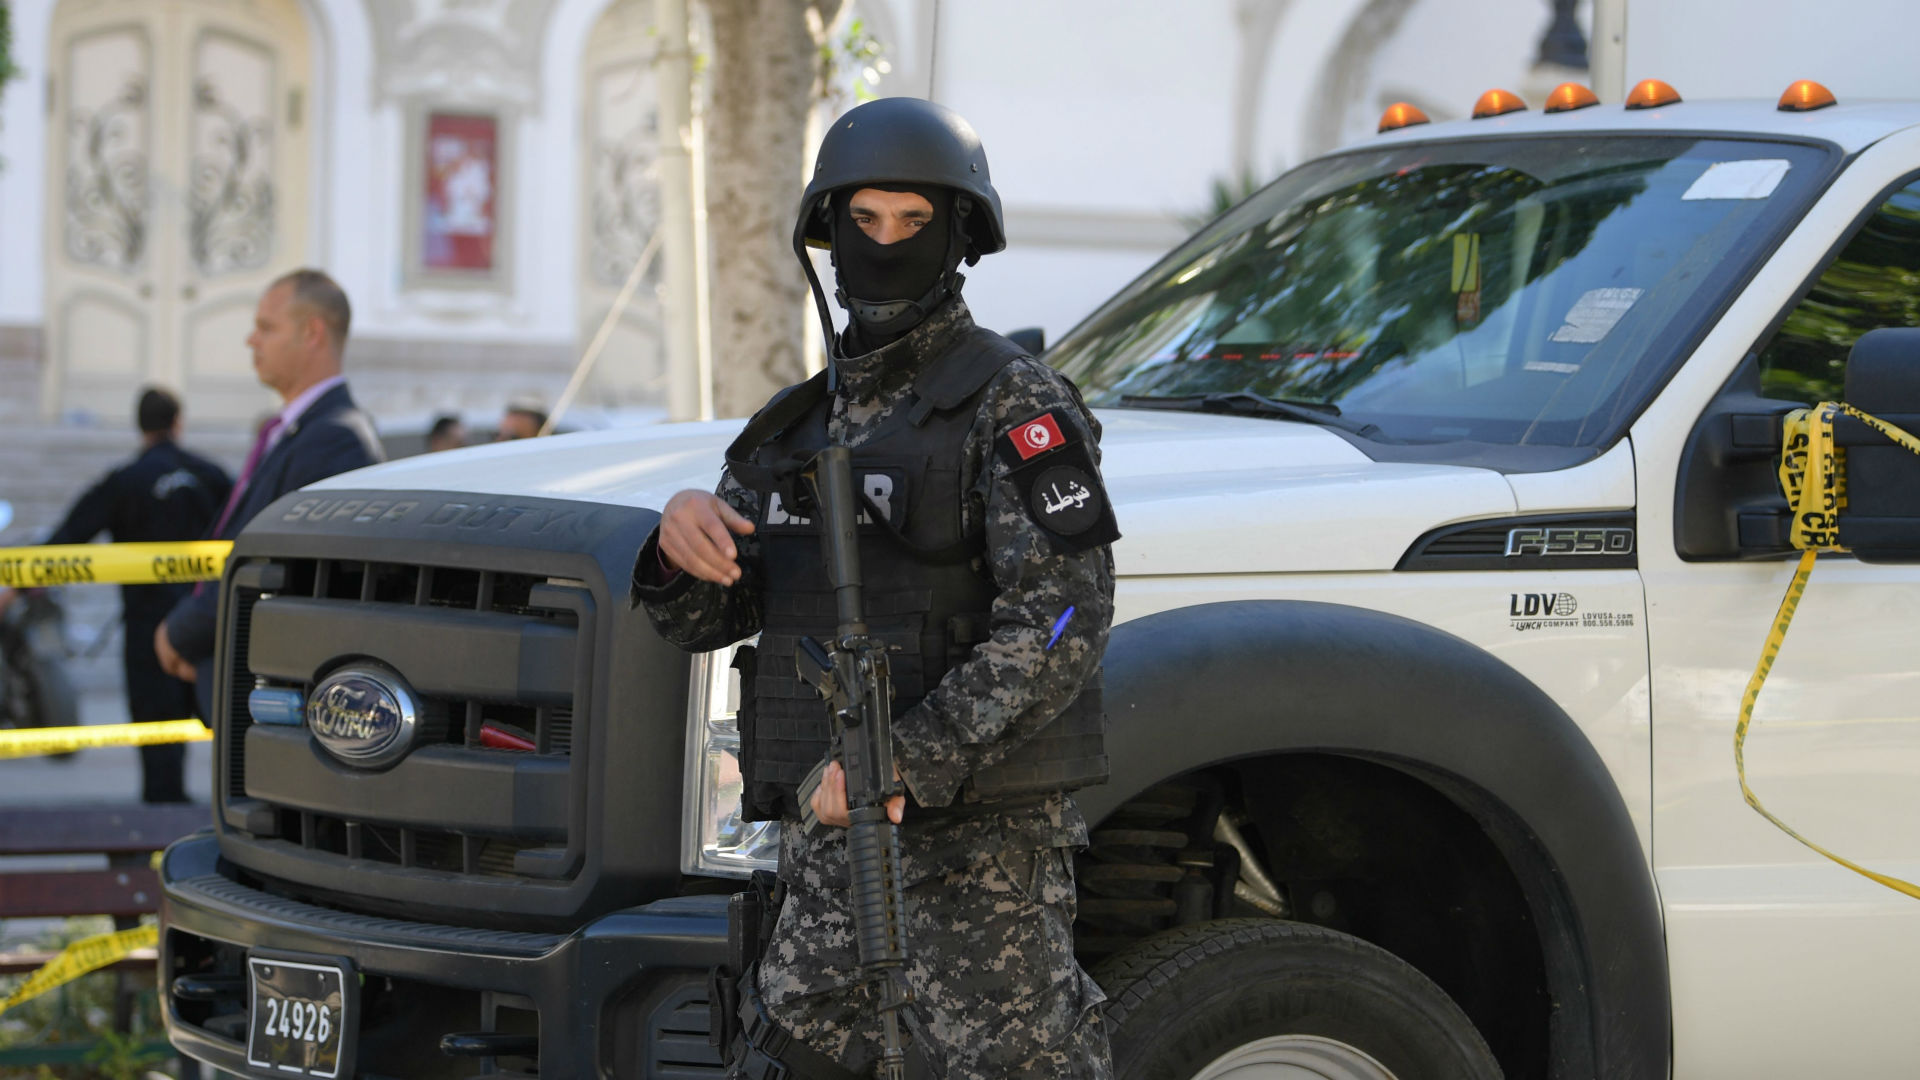 Tunisia: 12-member terror cell ‘preparing attacks’ dismantled in Zaghouan